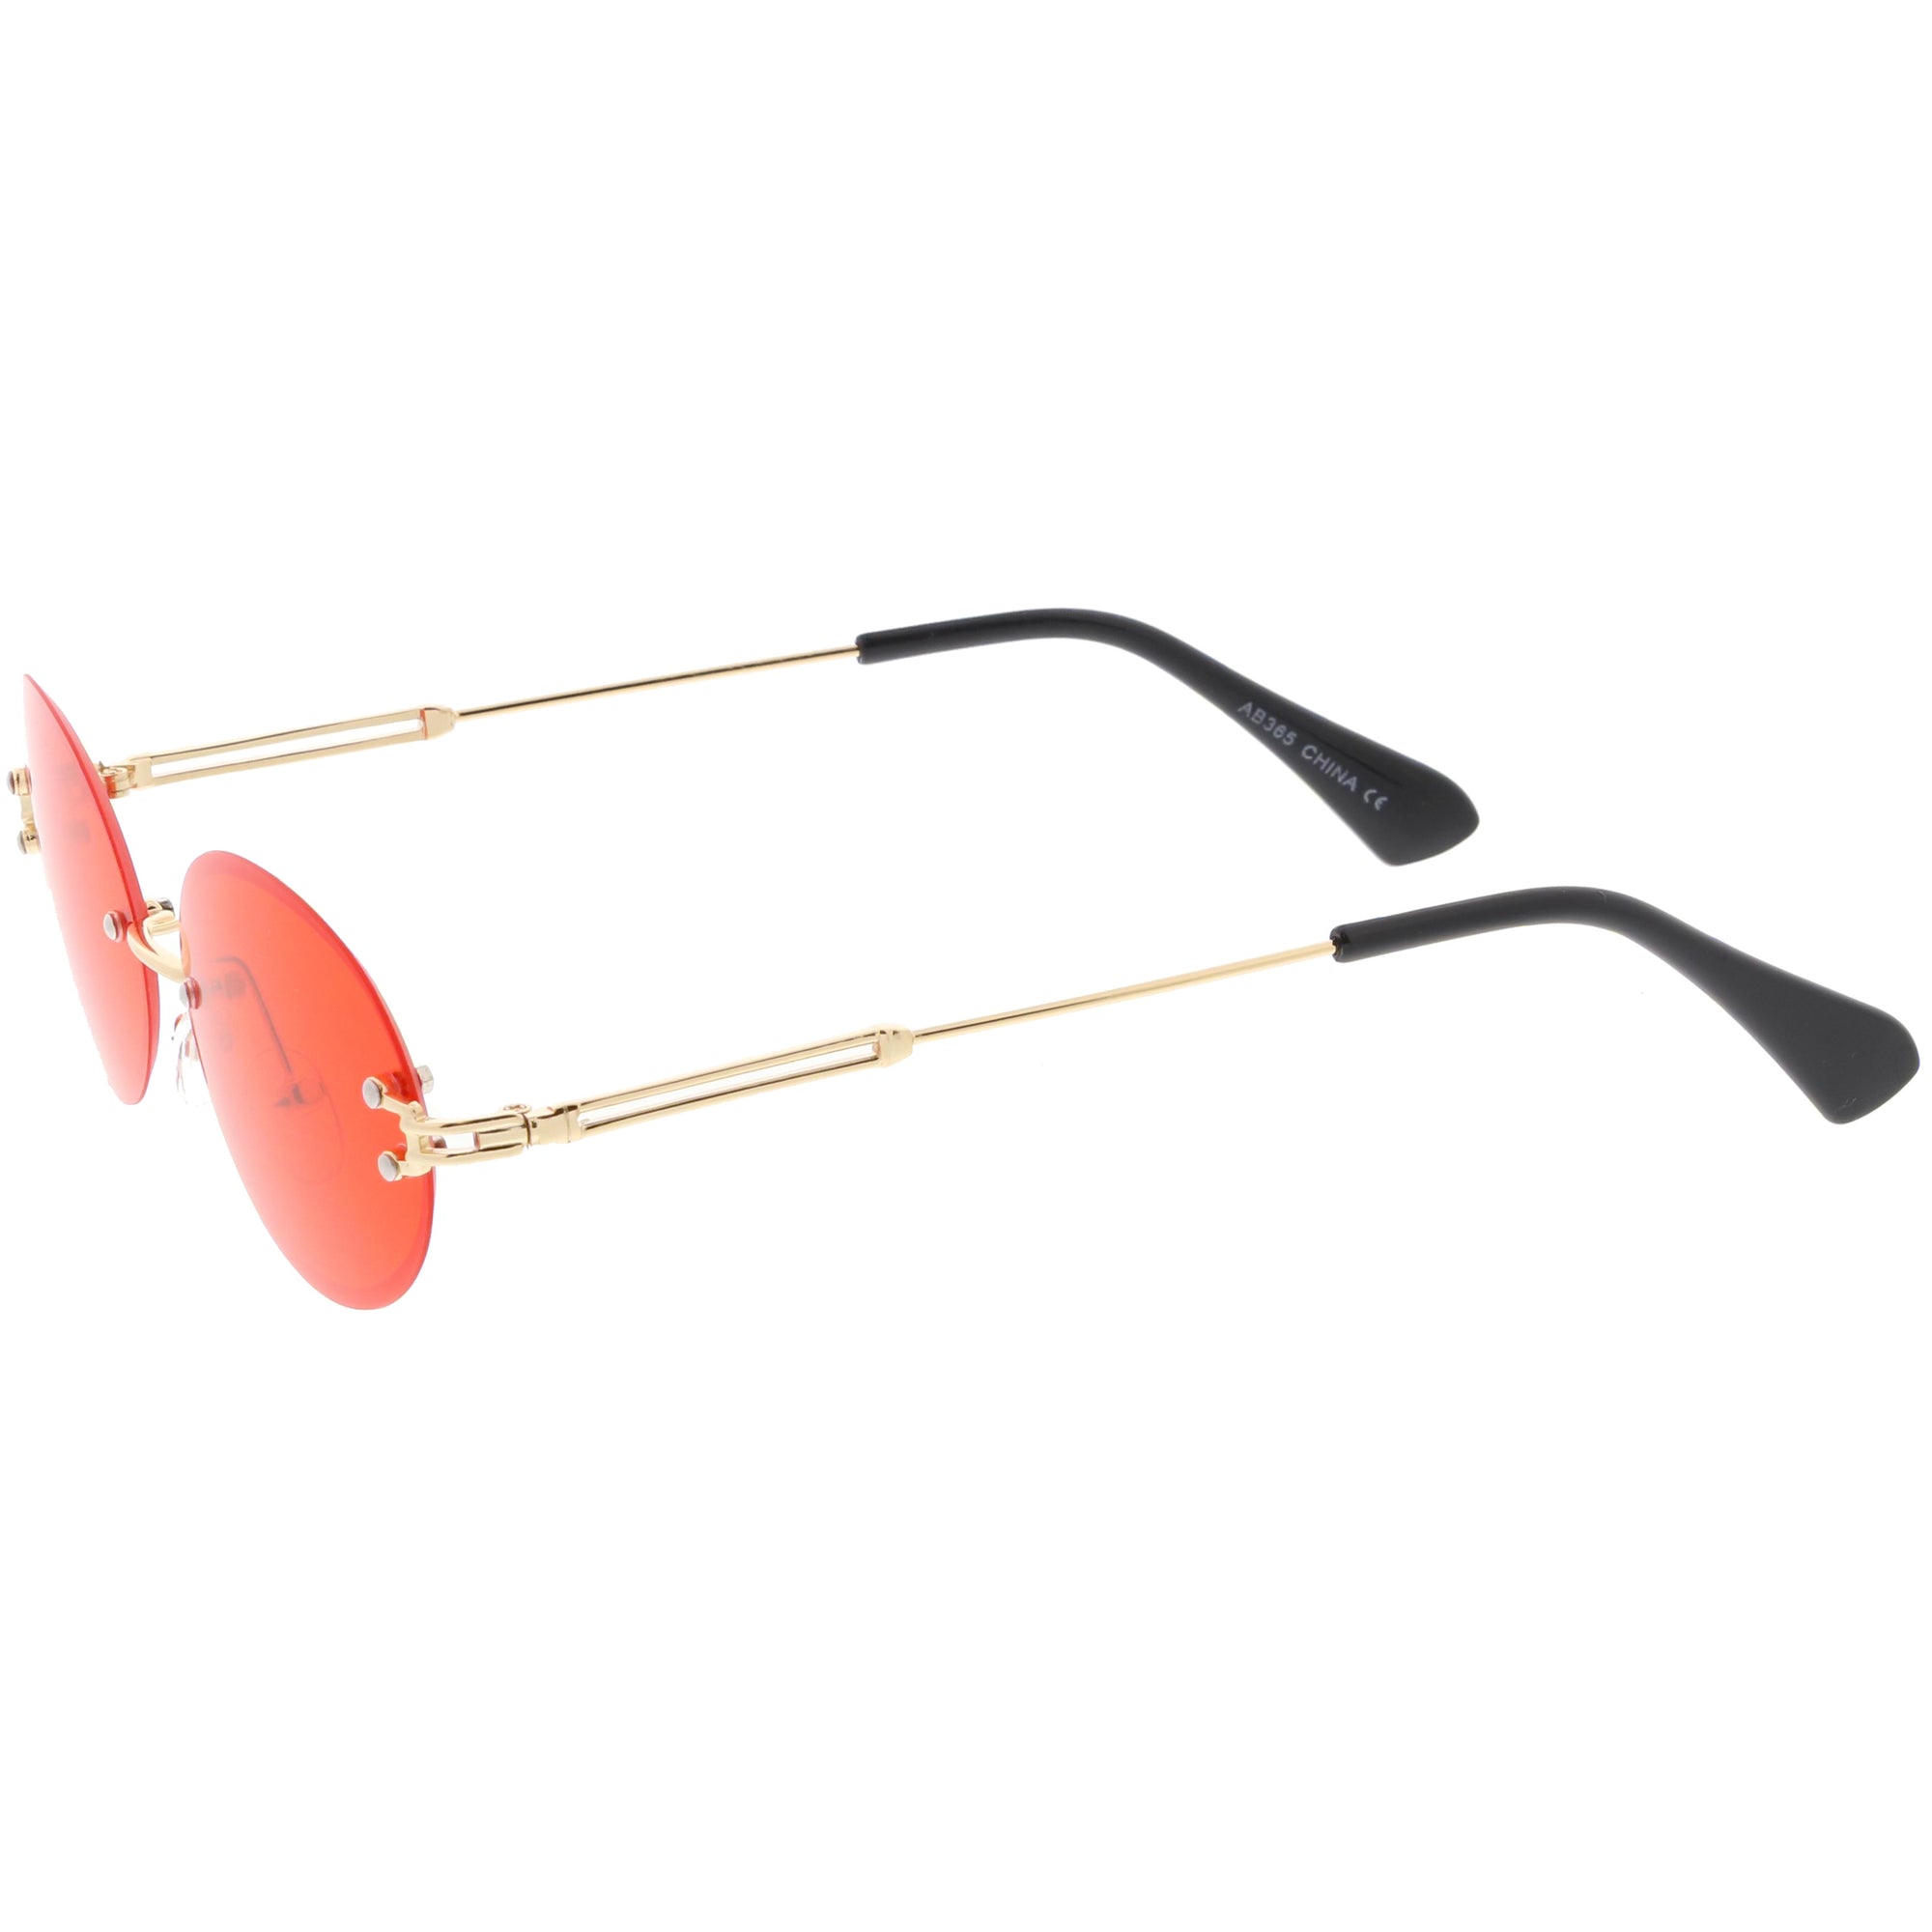 zeroUV Luxe 90s Inspired Full Rimless Sunglasses